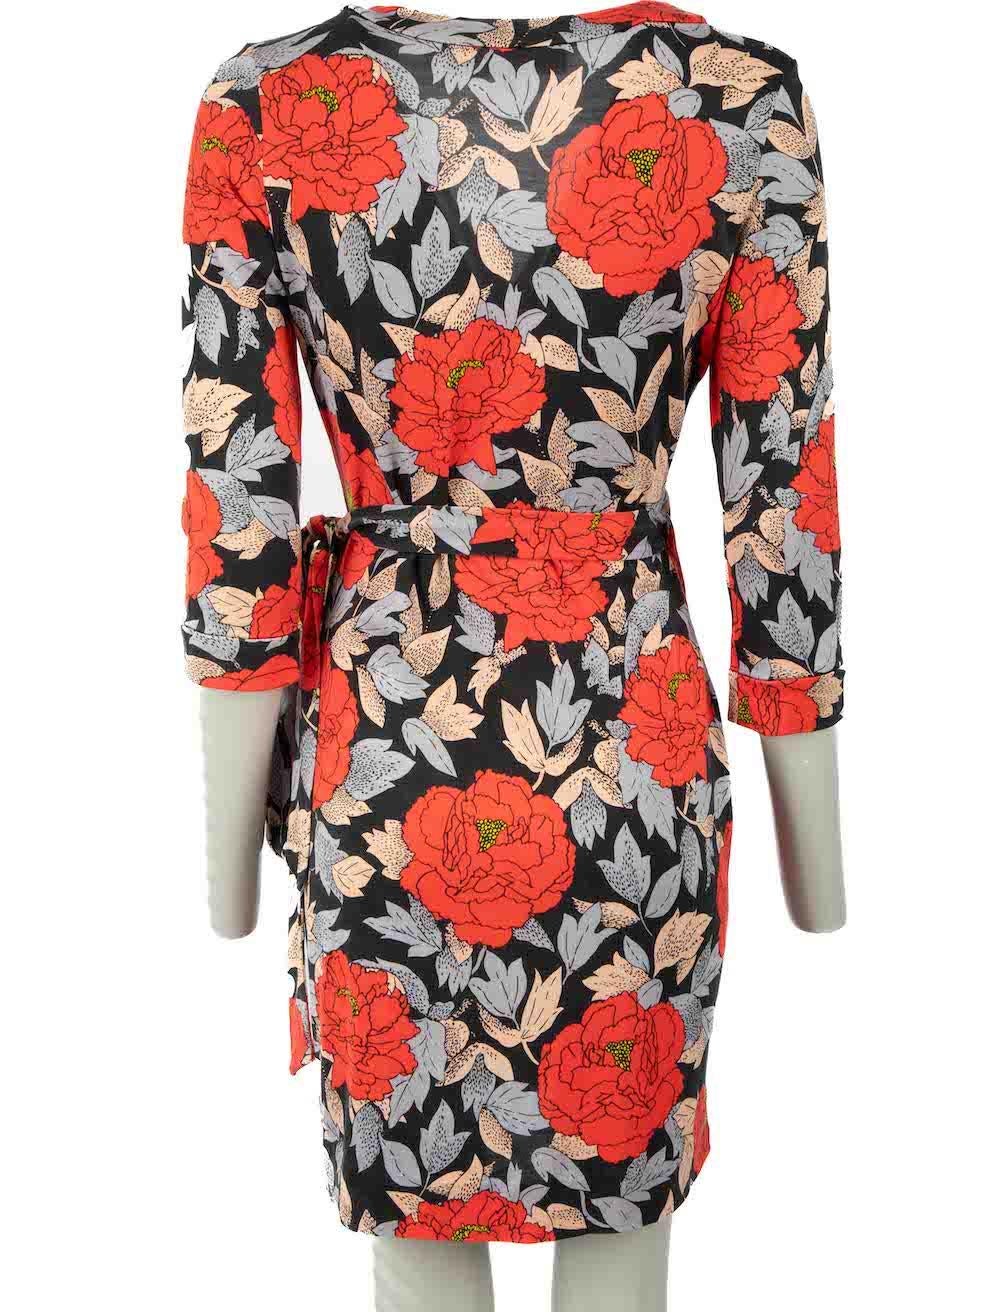 Diane Von Furstenberg Floral Pattern Wrap Dress Size M In Excellent Condition For Sale In London, GB